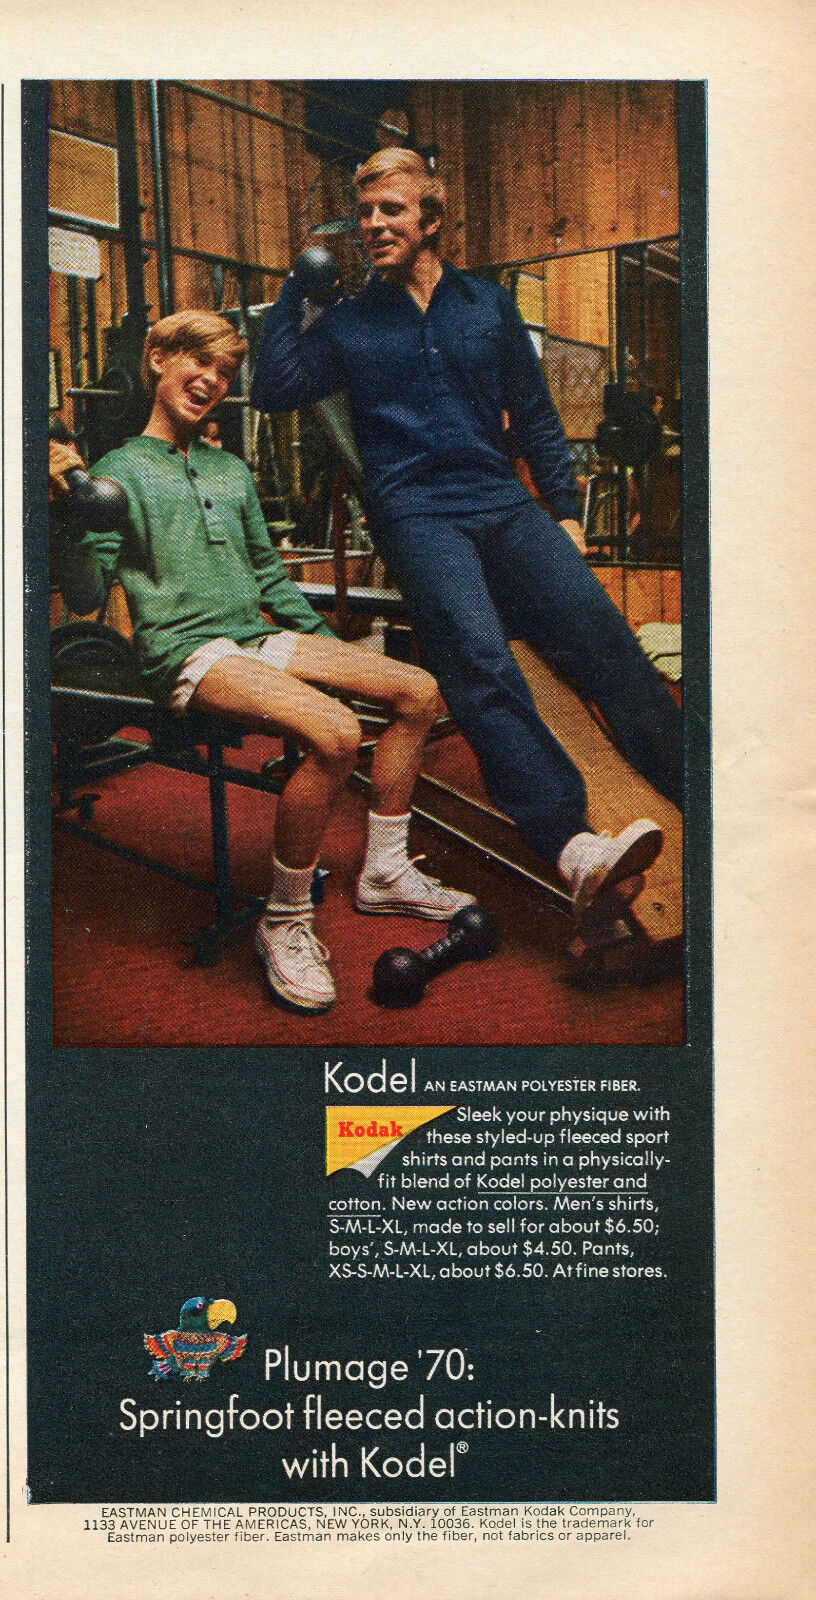 1970 Print Ad of Kodak Kodel Eastman Polyester Fiber Plumage Springfoot Fleeced